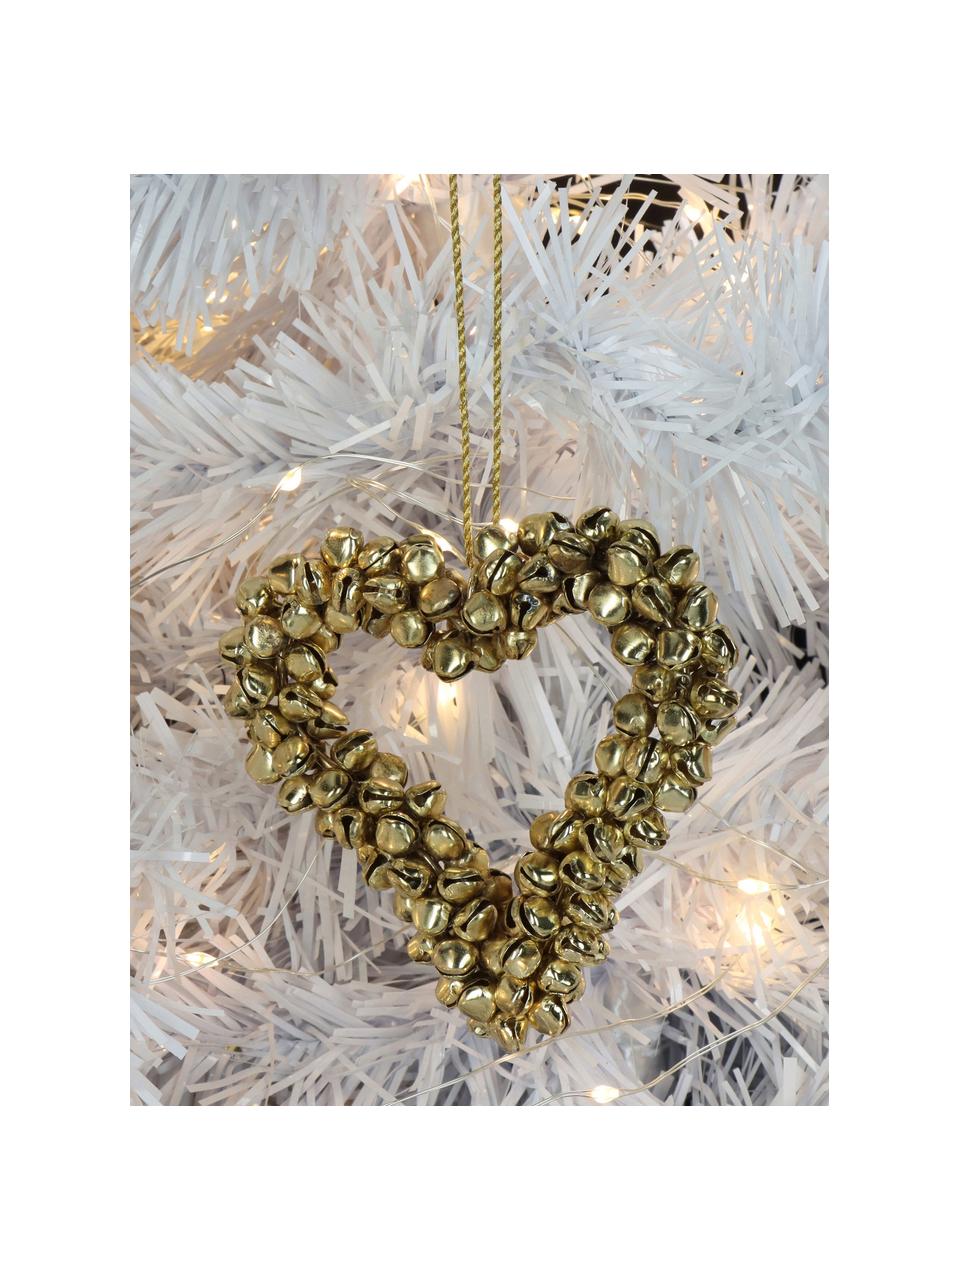 Ozdoba na vánoční stromeček s rolničkami Heart, Potažený kov, Zlatá, Š 9 cm, V 9 cm